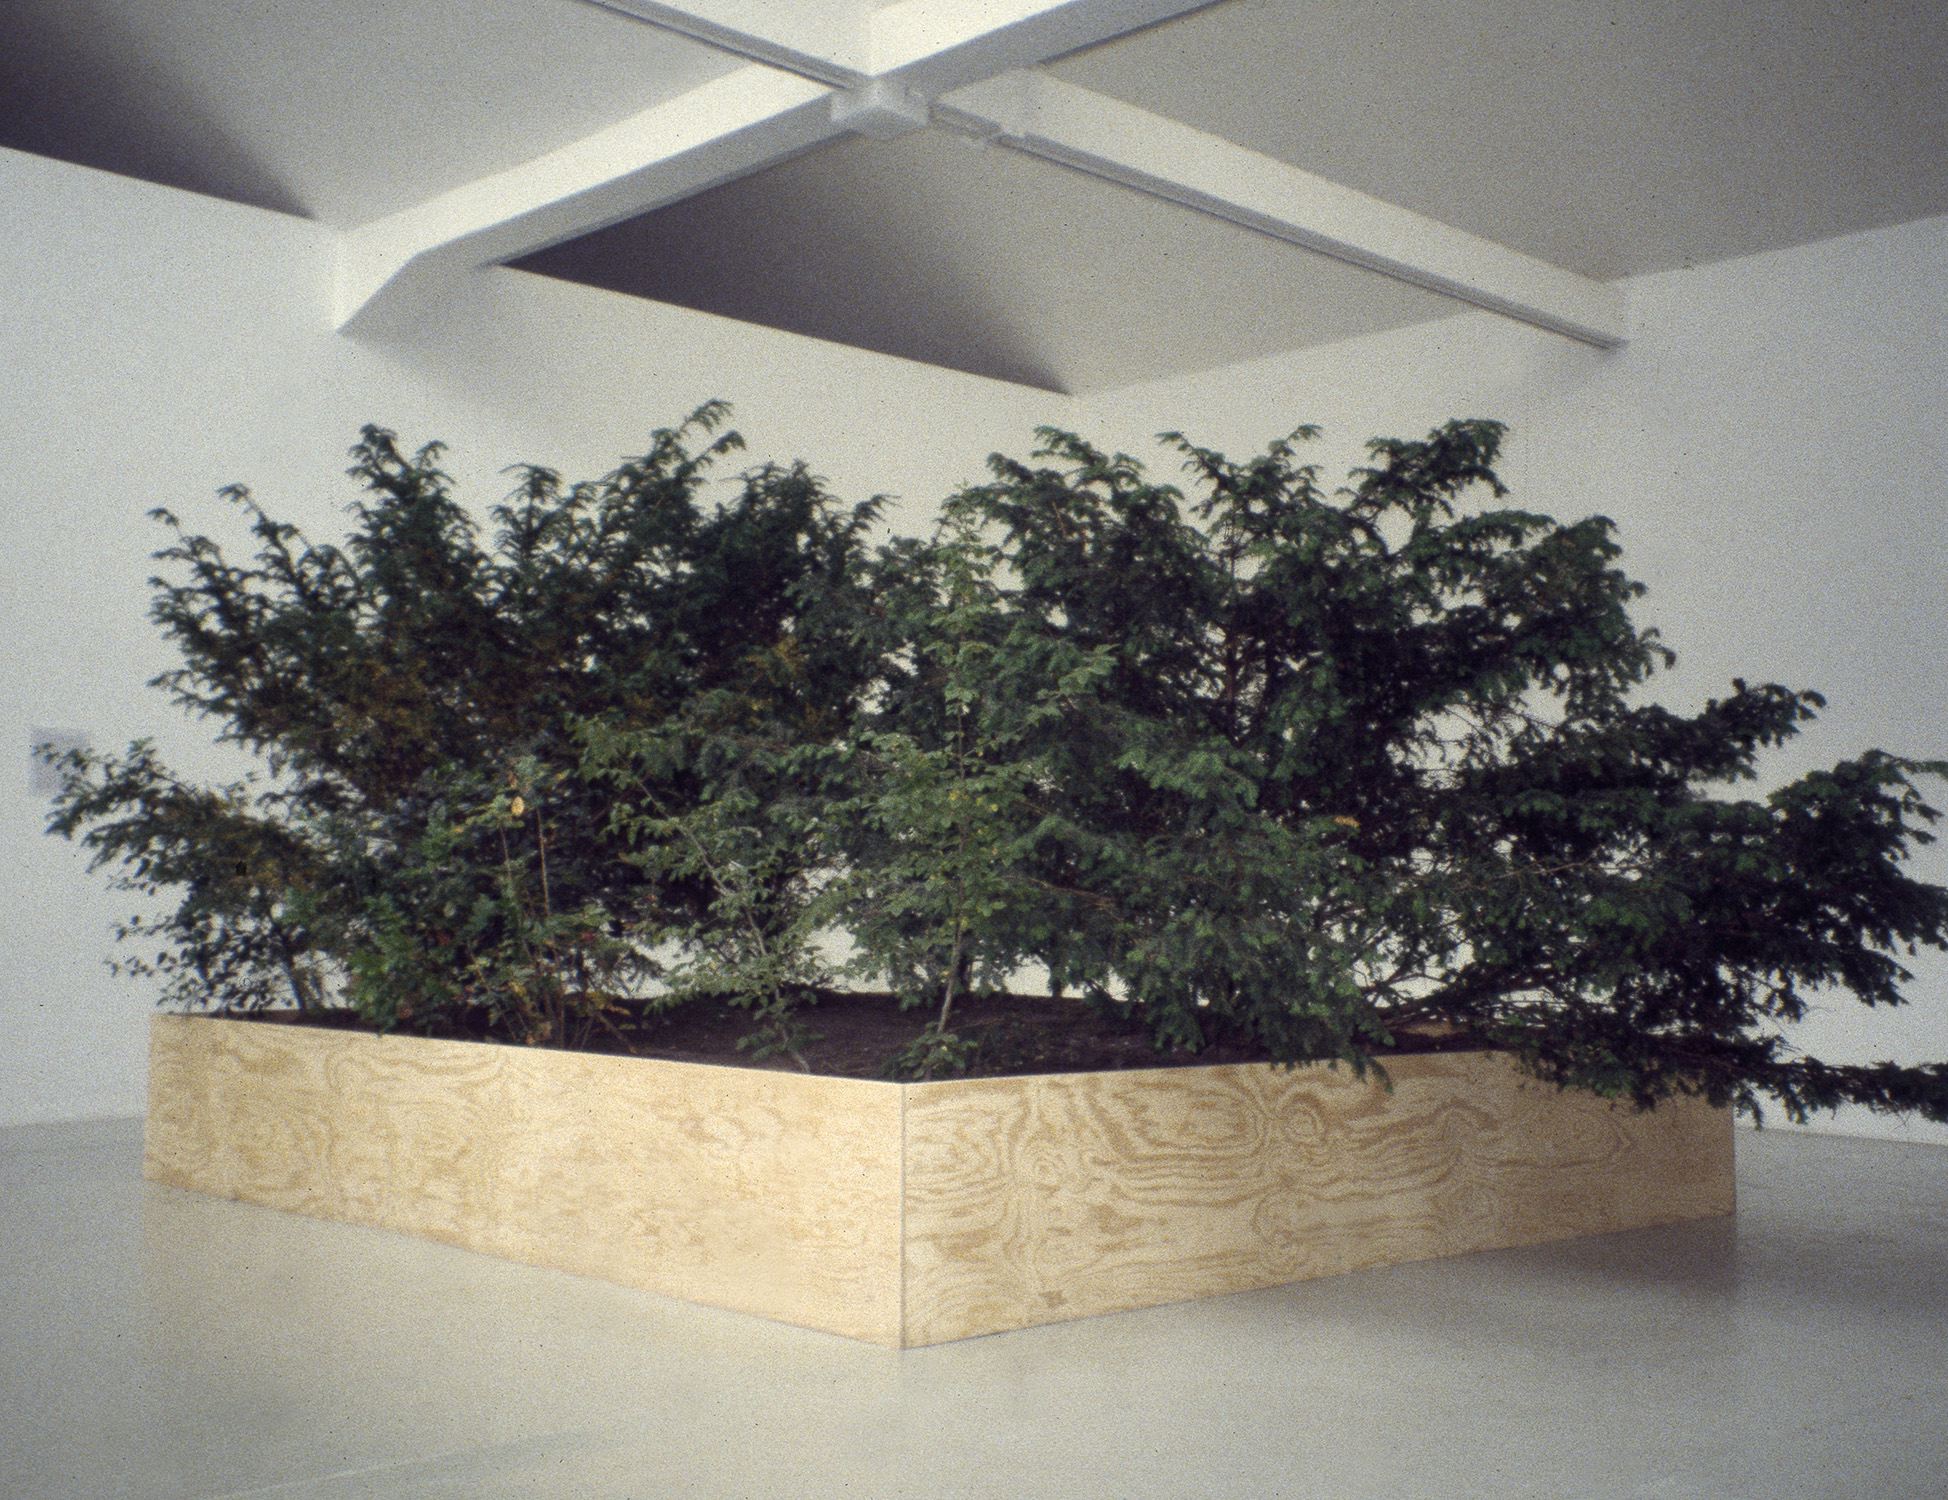 Tom Burr, Circa '77, 1995, wood, soil, trees, found objects.Photo courtesy Bortolami.